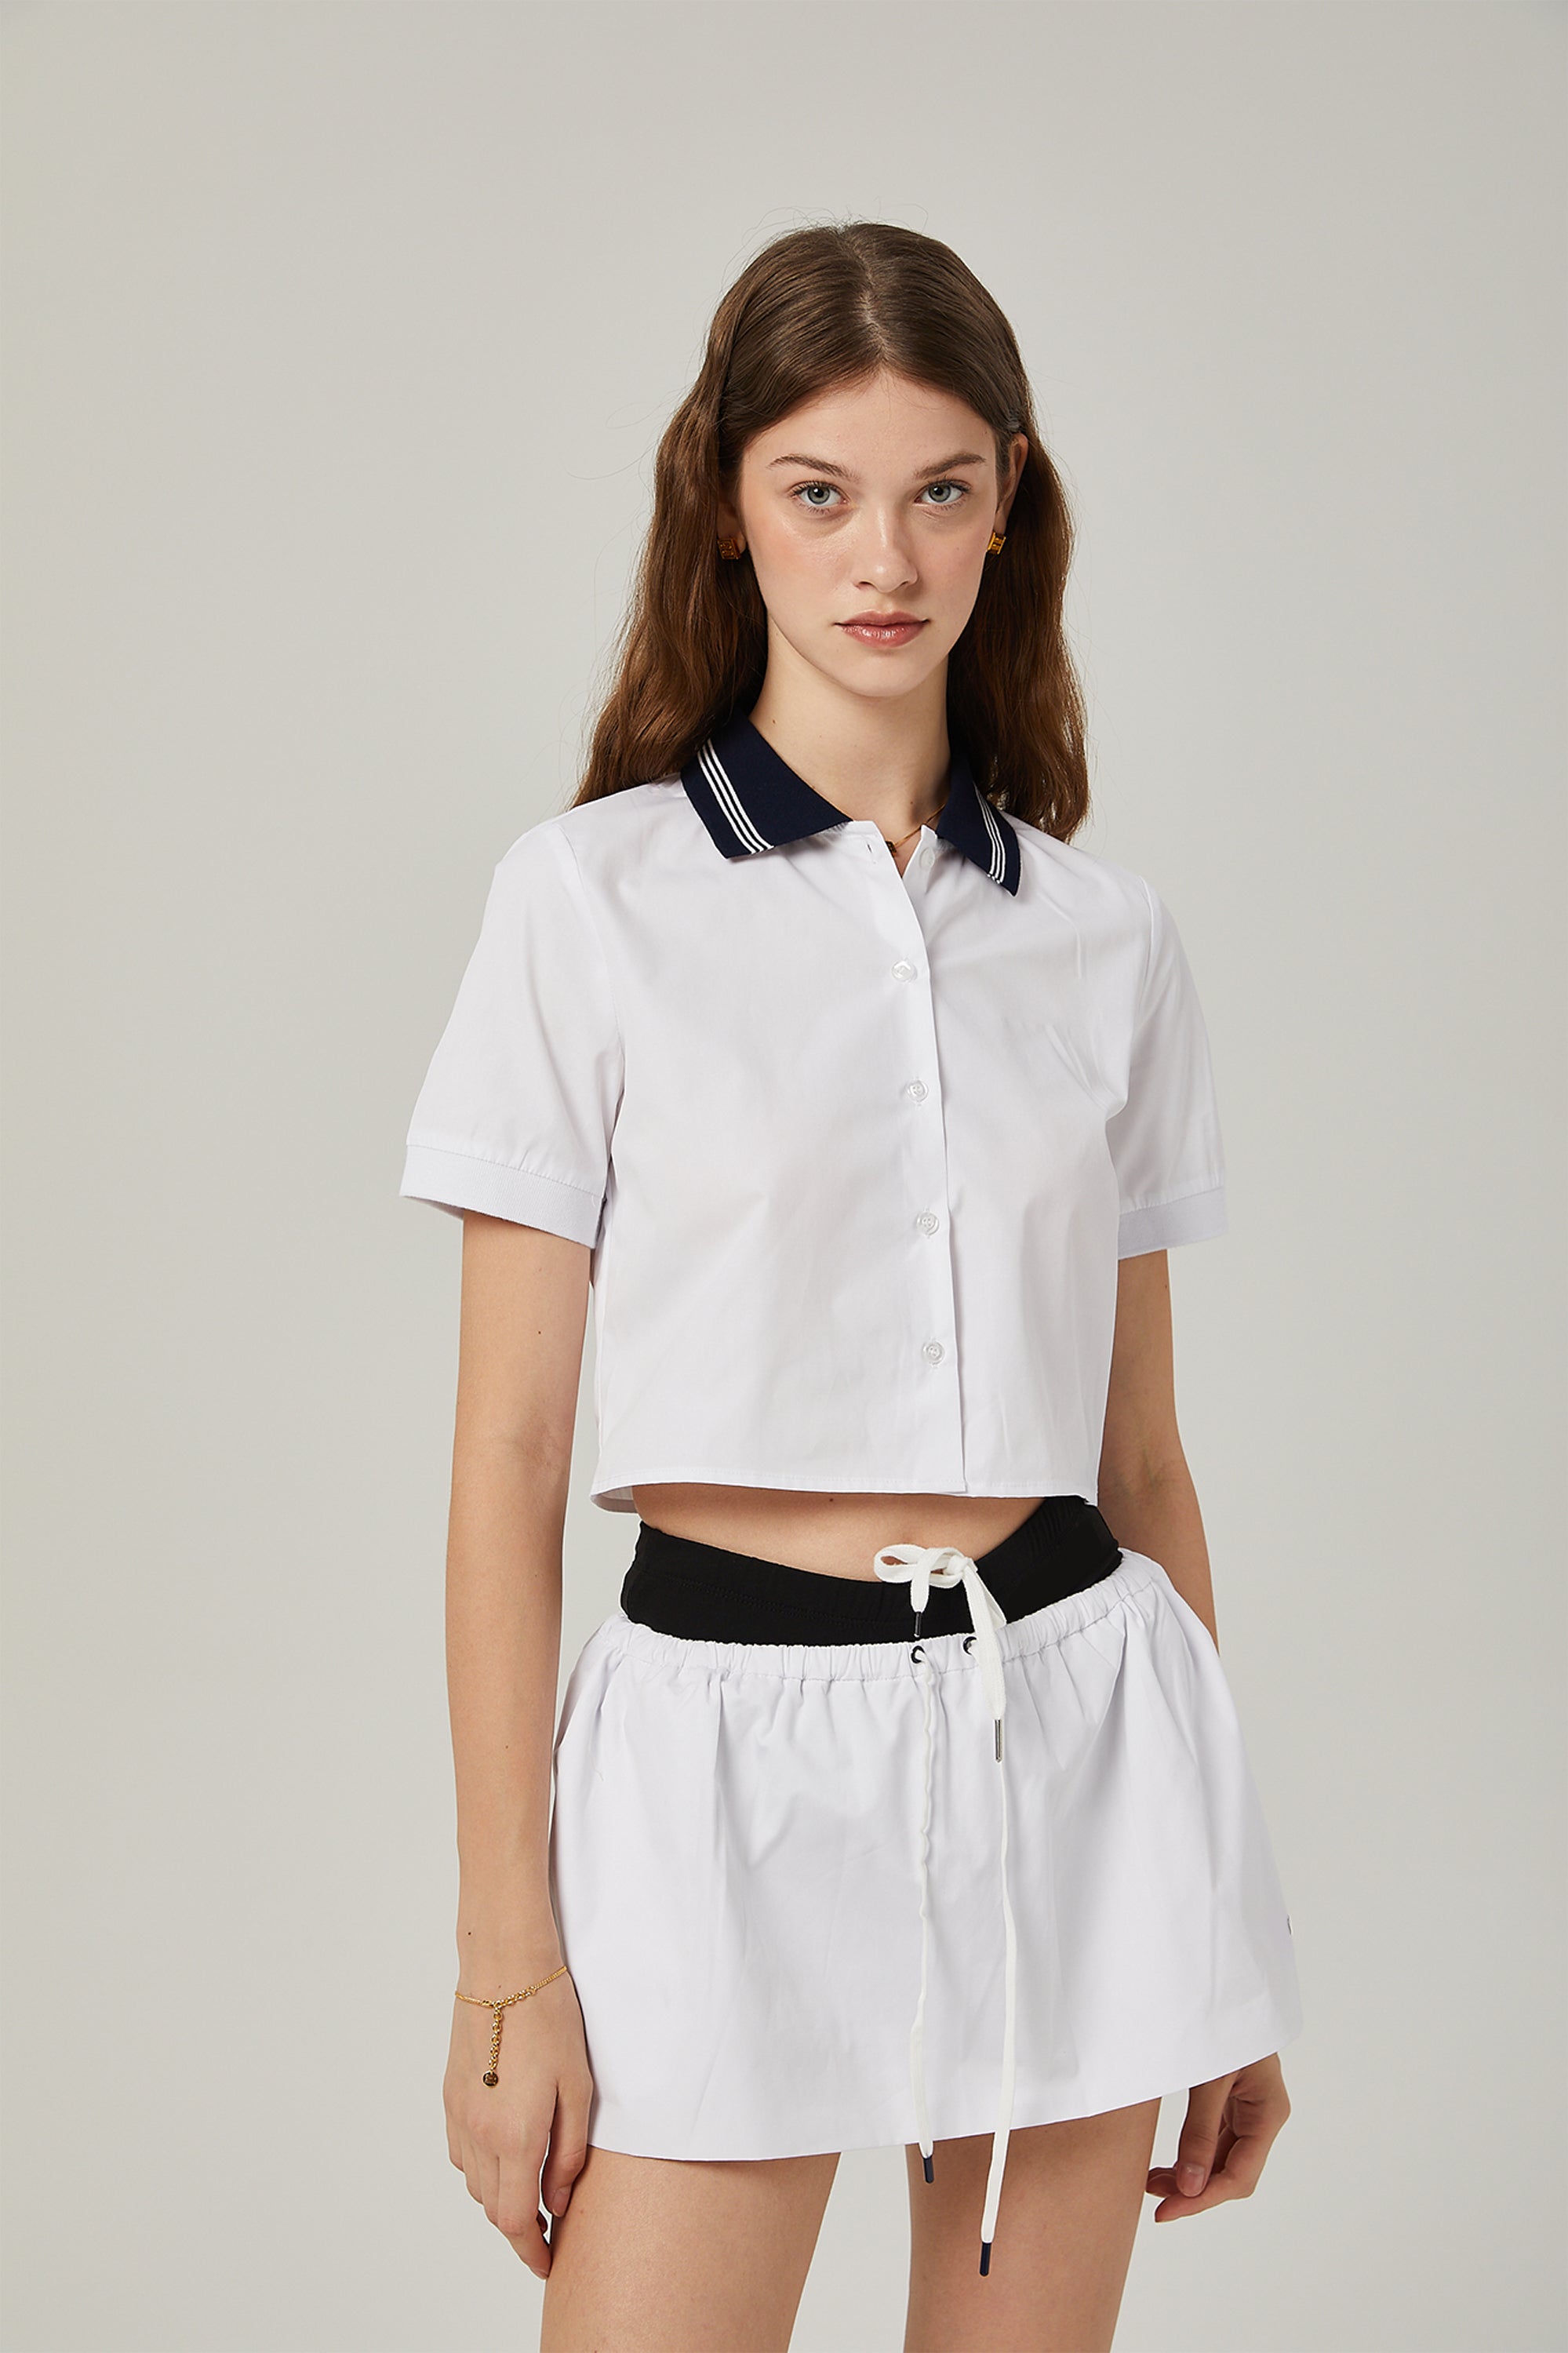 Sandrine color-block shirt & skirt matching set